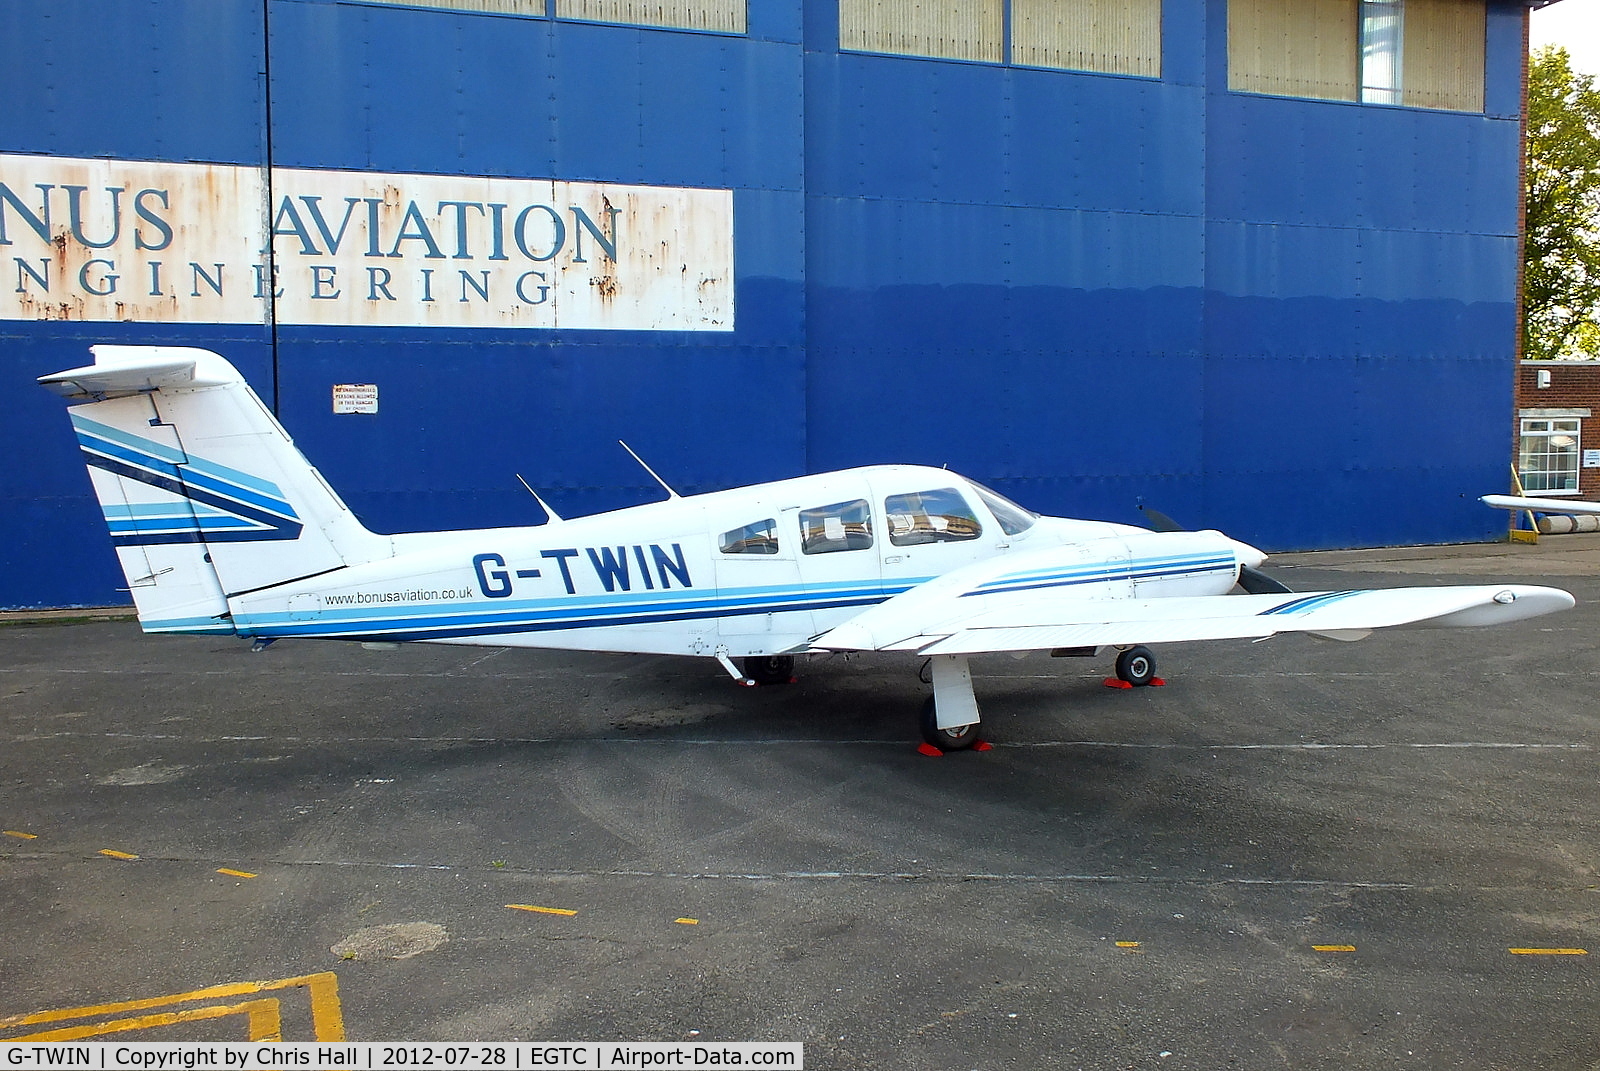 G-TWIN, 1978 Piper PA-44-180 Seminole C/N 44-7995072, Bonus Aviation